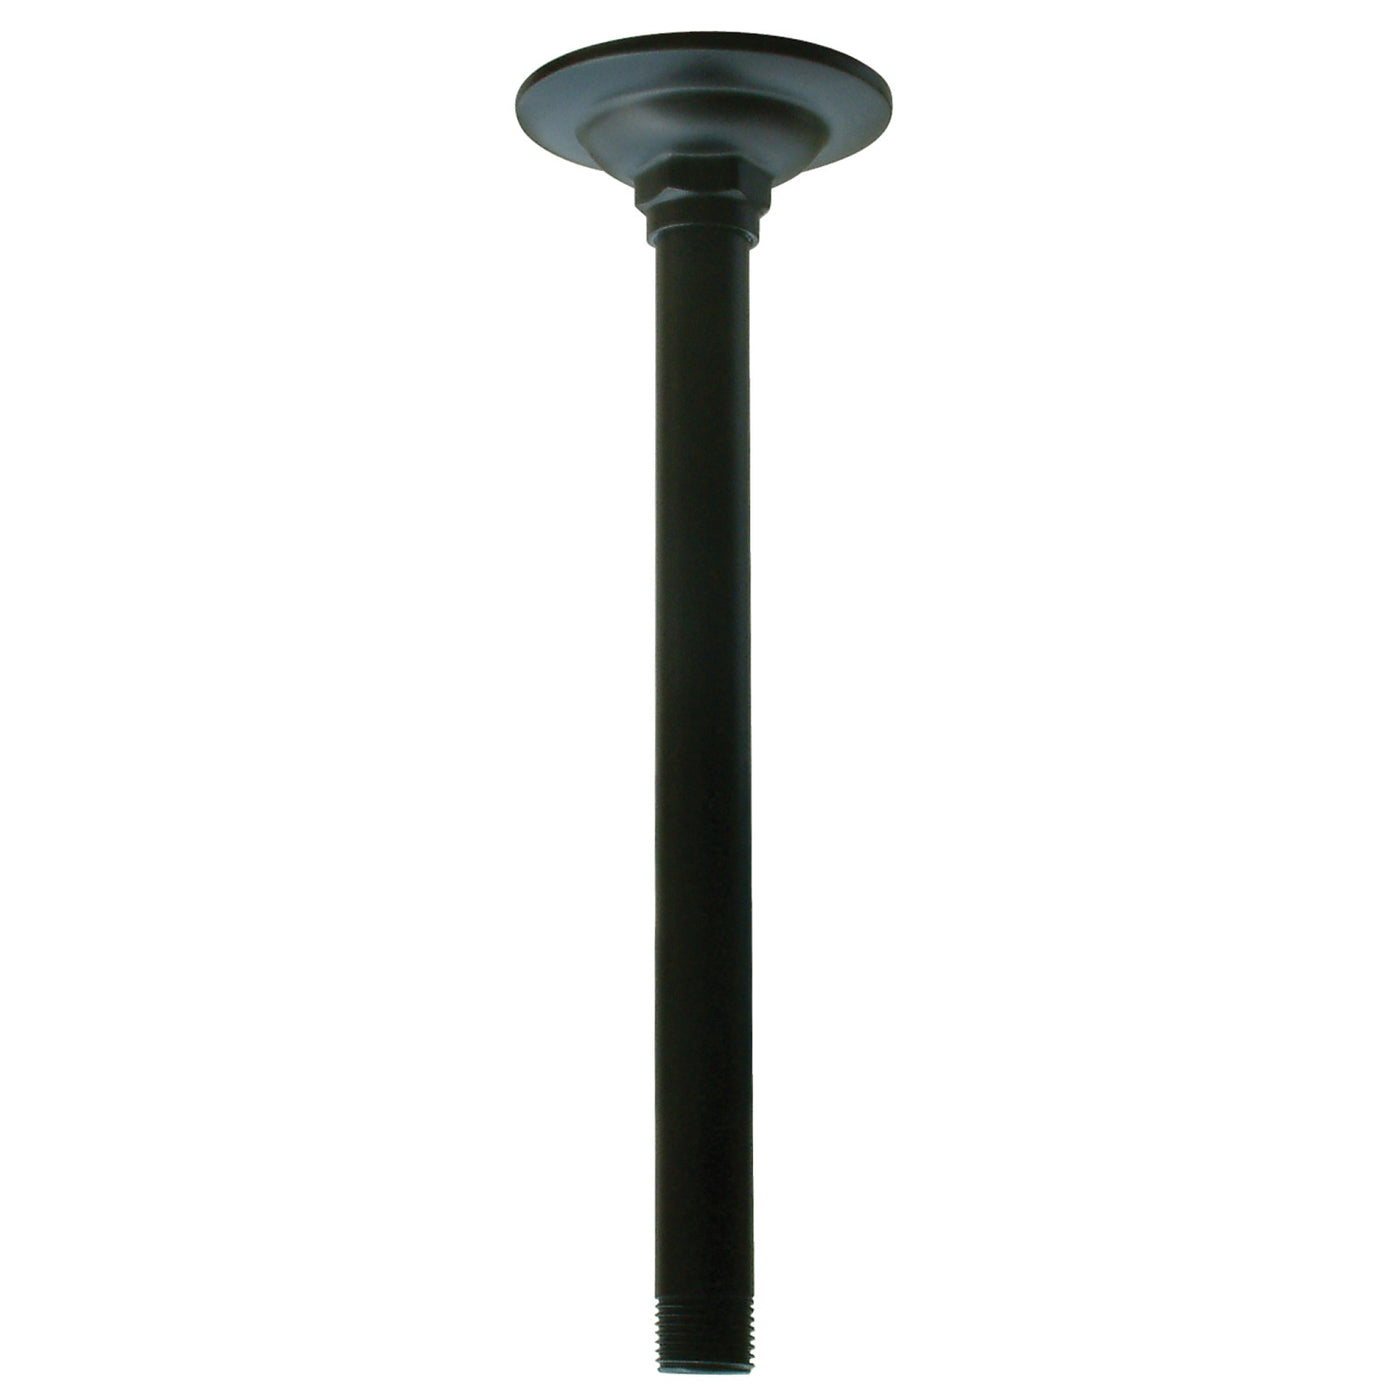 Elements of Design DK2105 10-Inch Rain Drop Ceiling Mount Shower Arm, Oil Rubbed Bronze